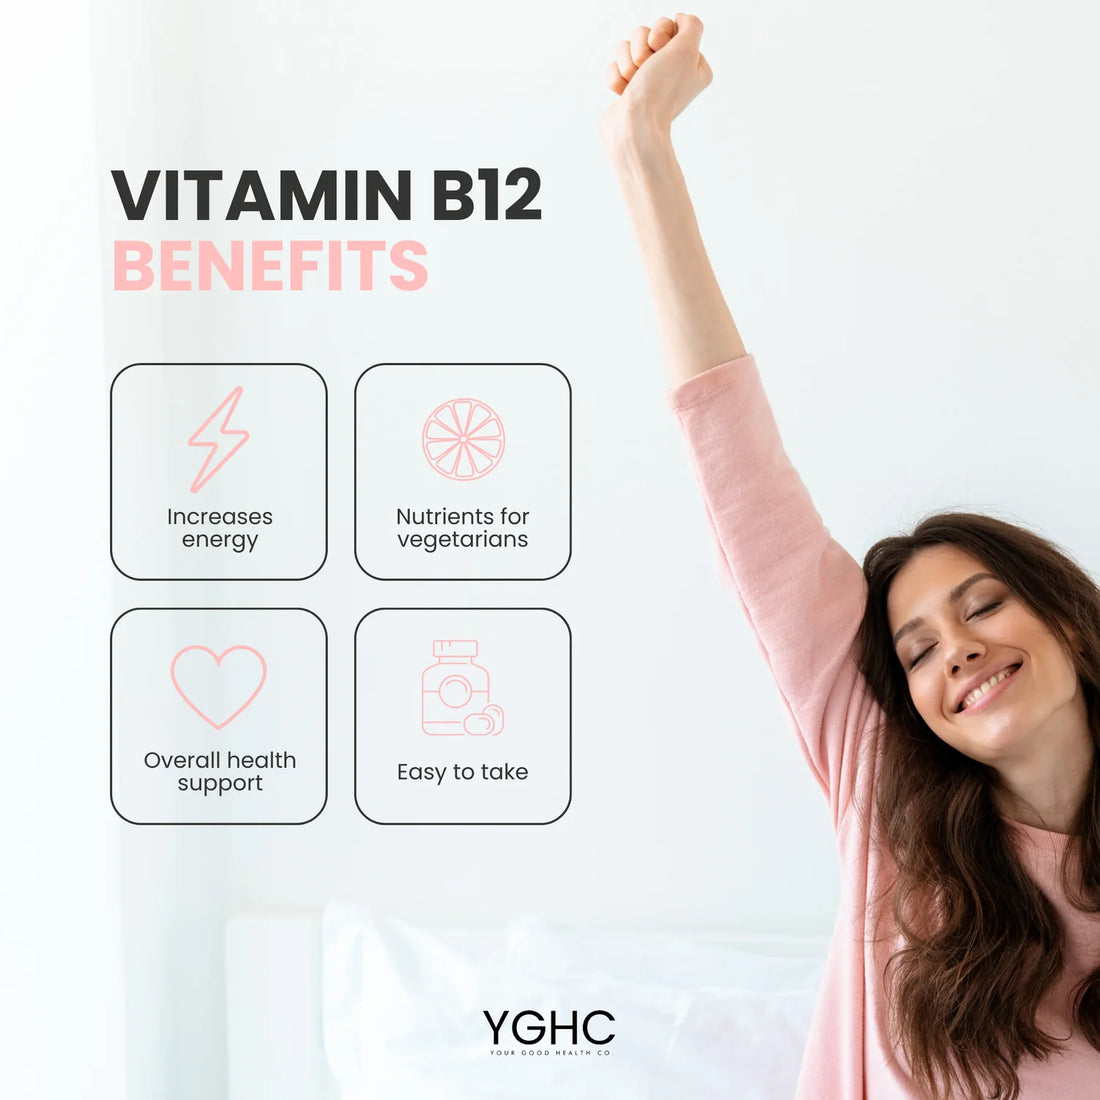 90 Day Vitamin B12